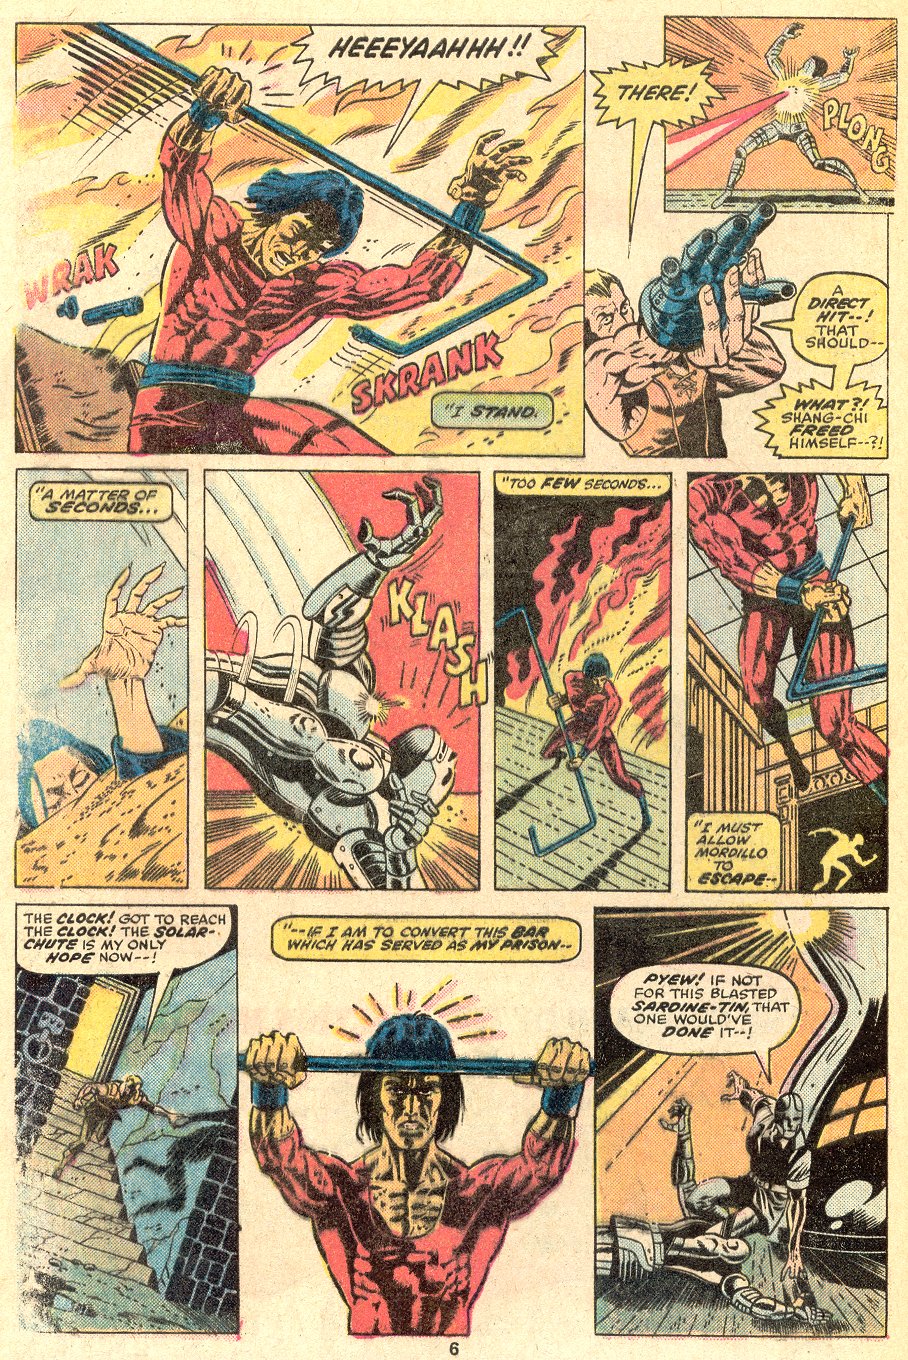 Master of Kung Fu (1974) Issue #35 #20 - English 5